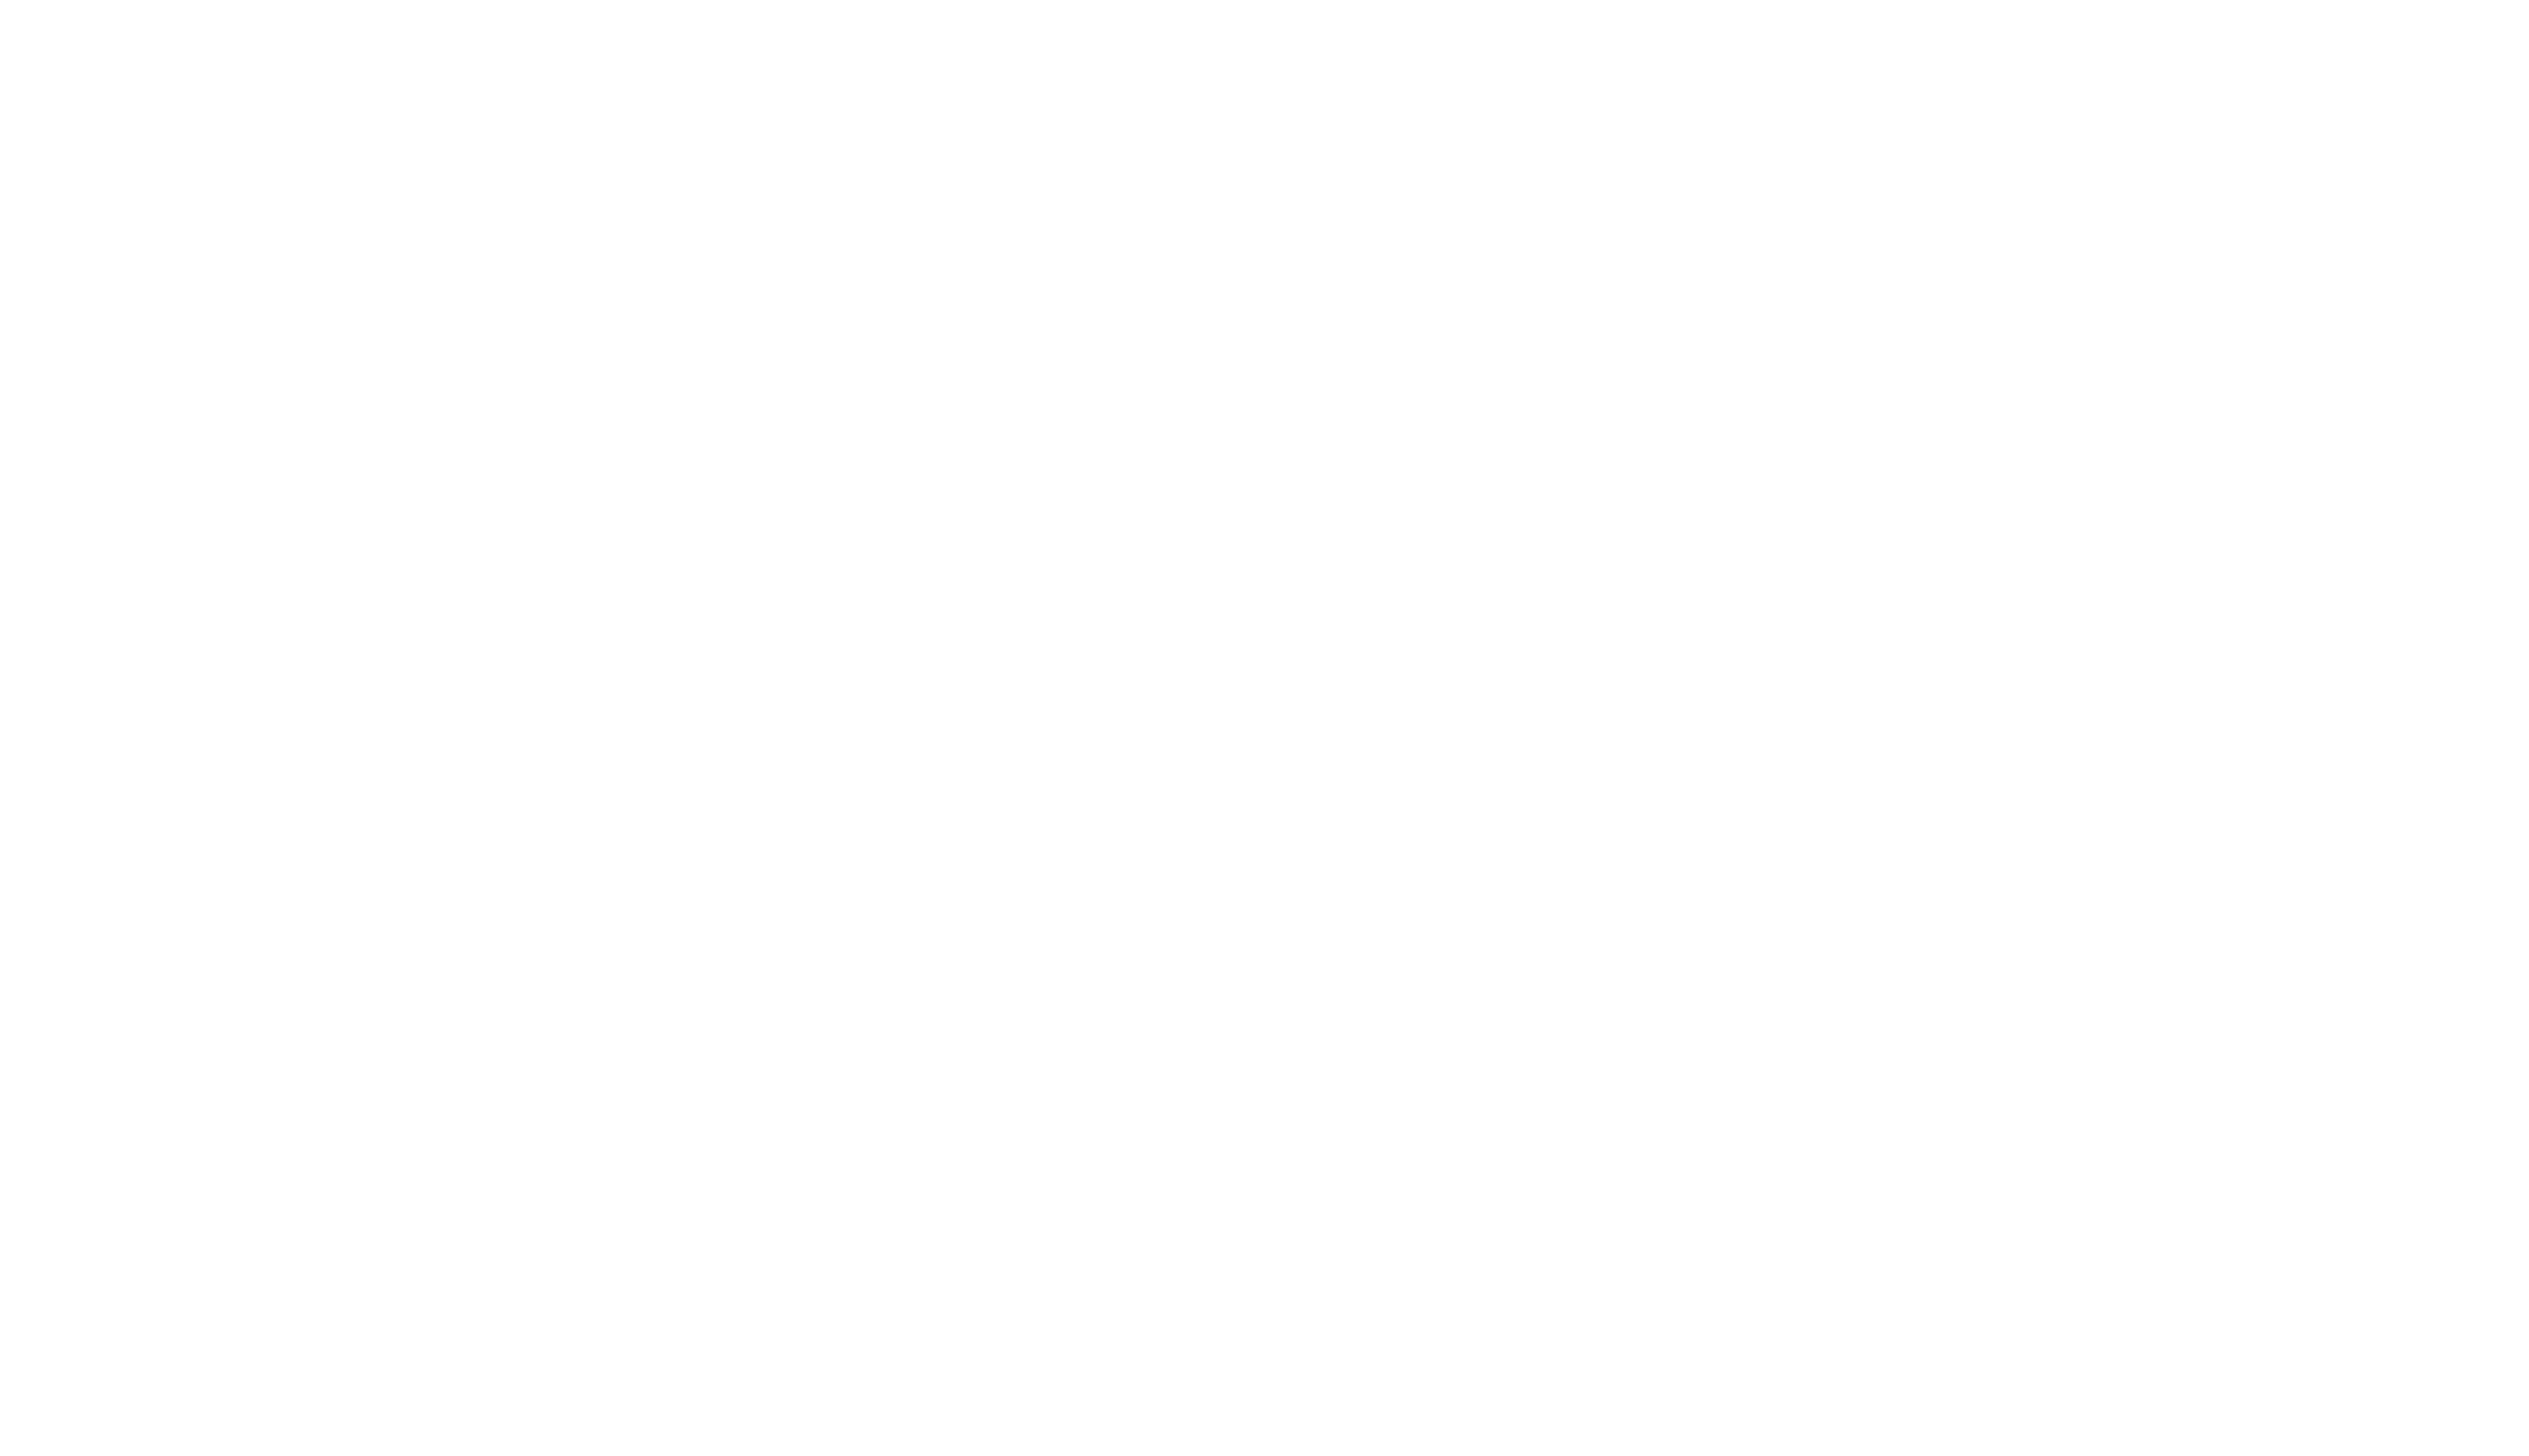 Austin Film Fest